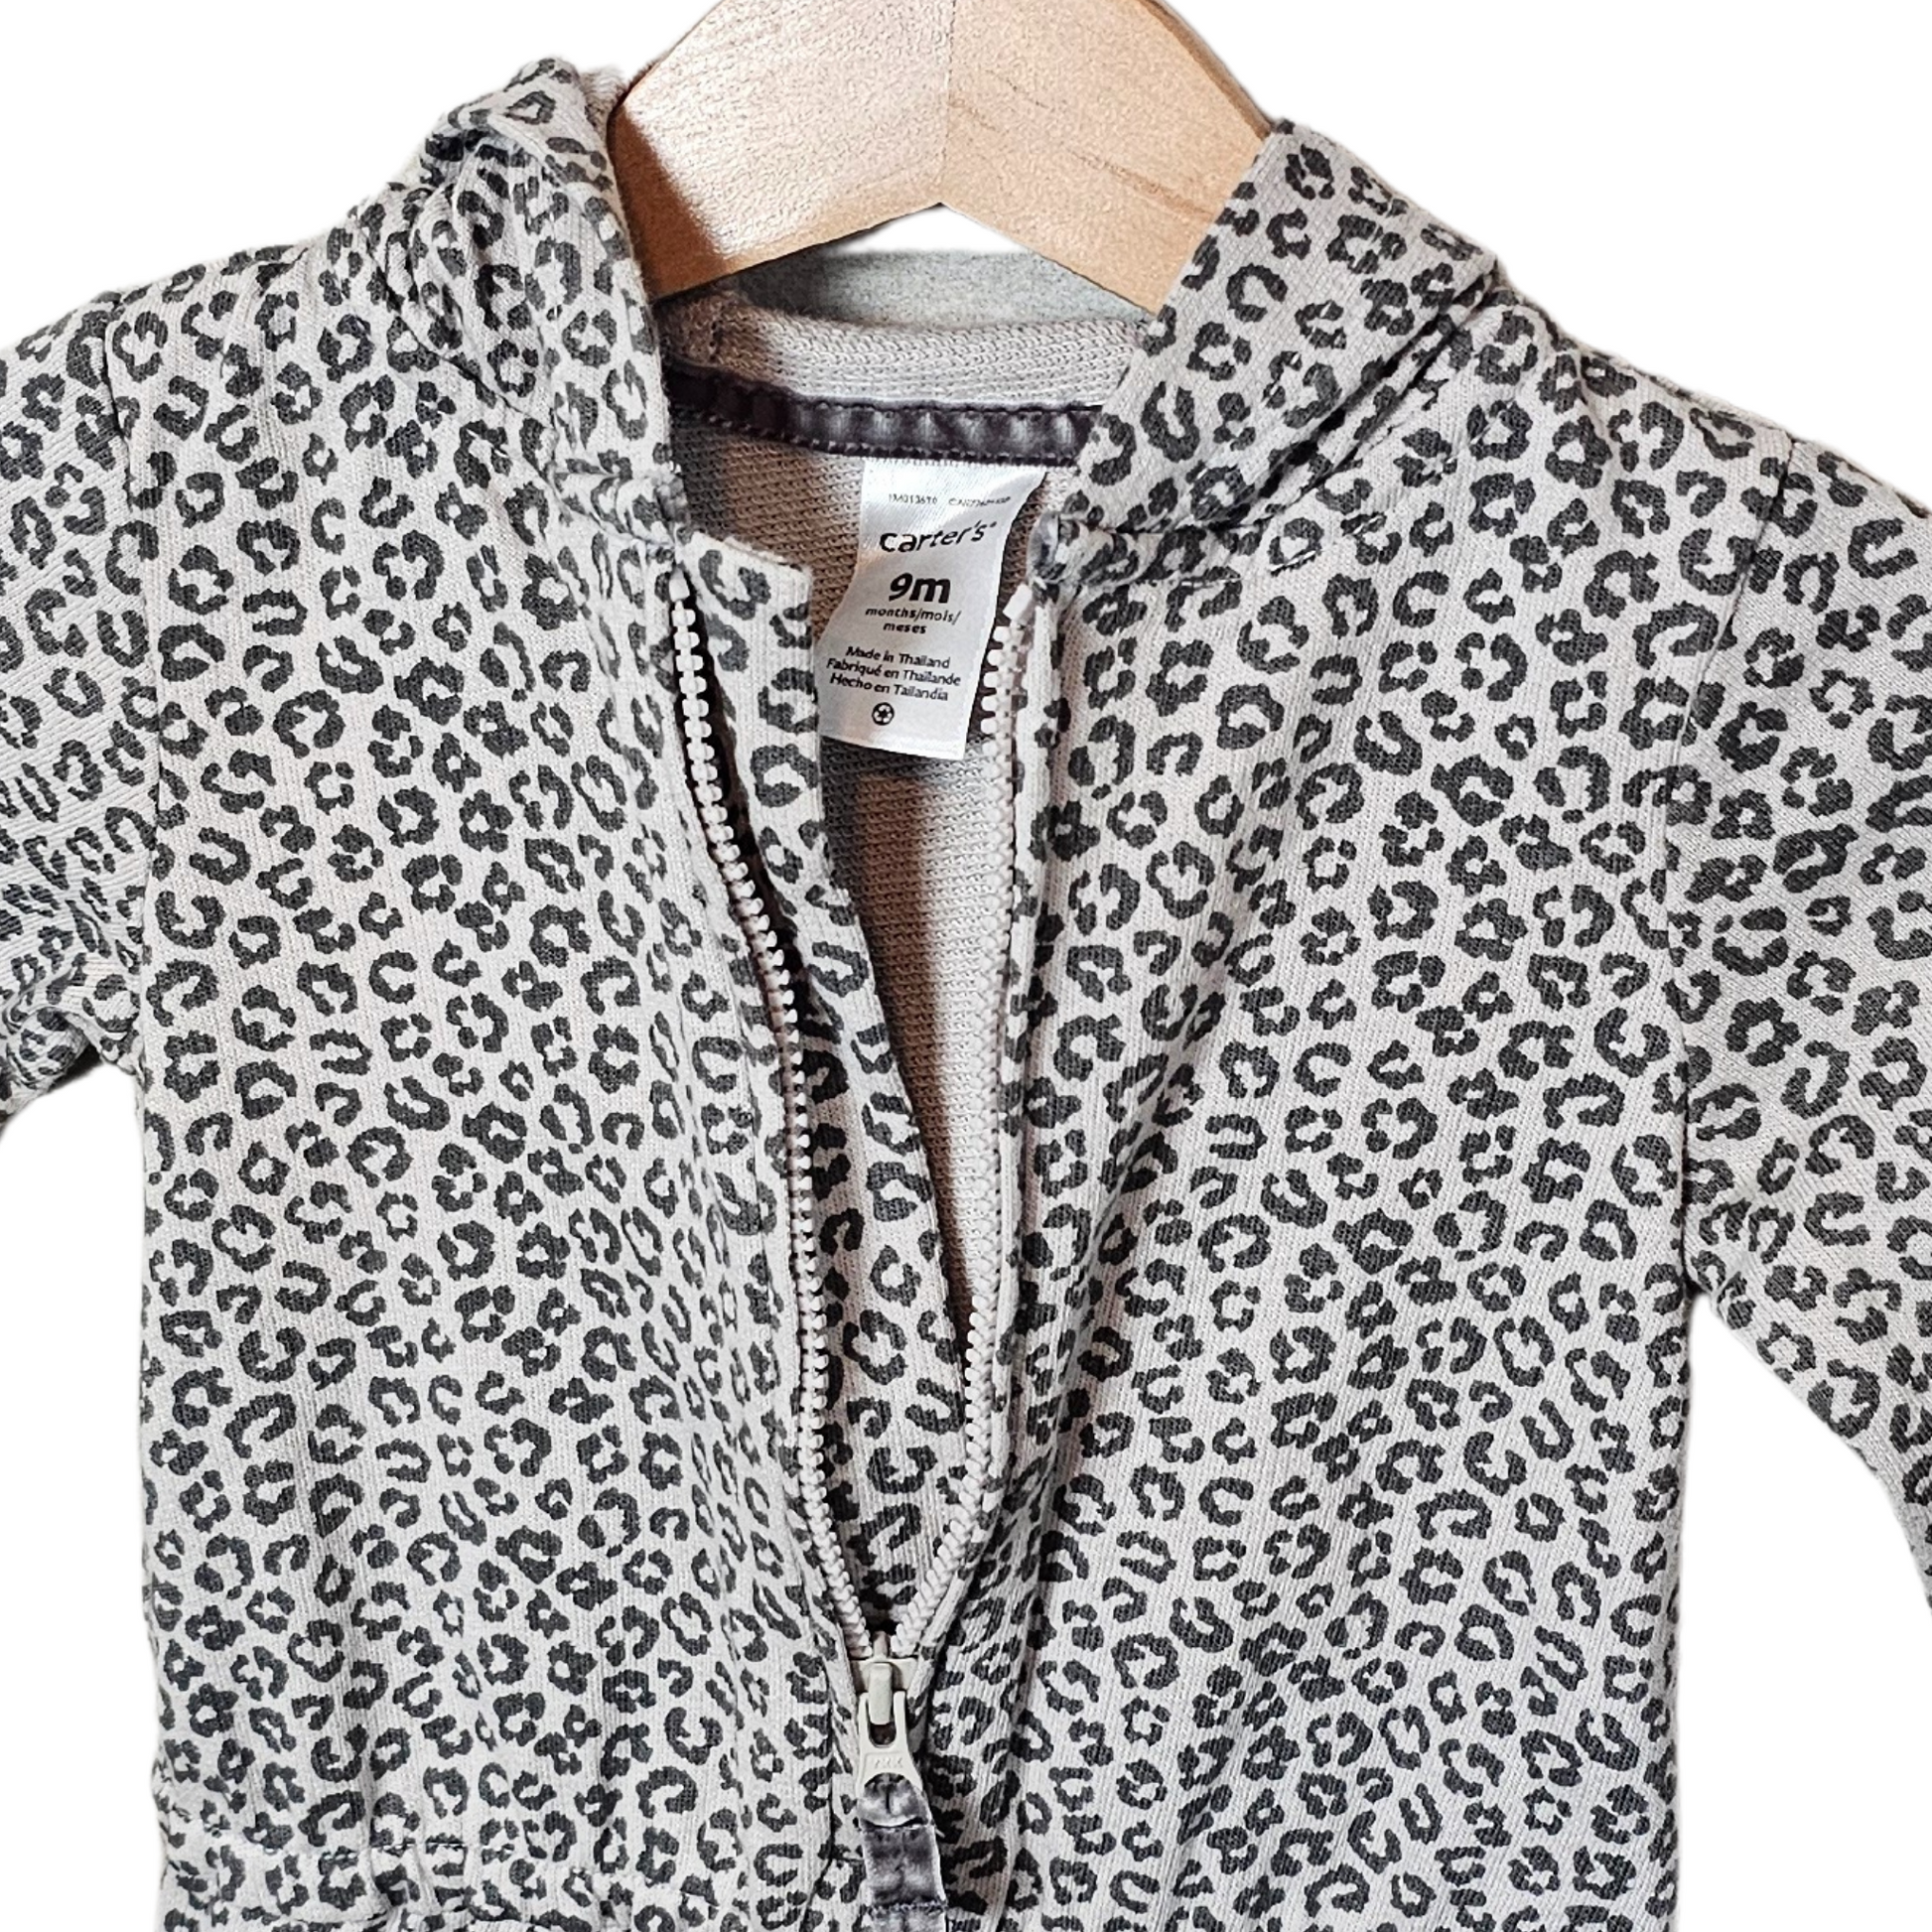 Carters Leopard Hooded 1pc Jumpsuit Size 9 months, close-up